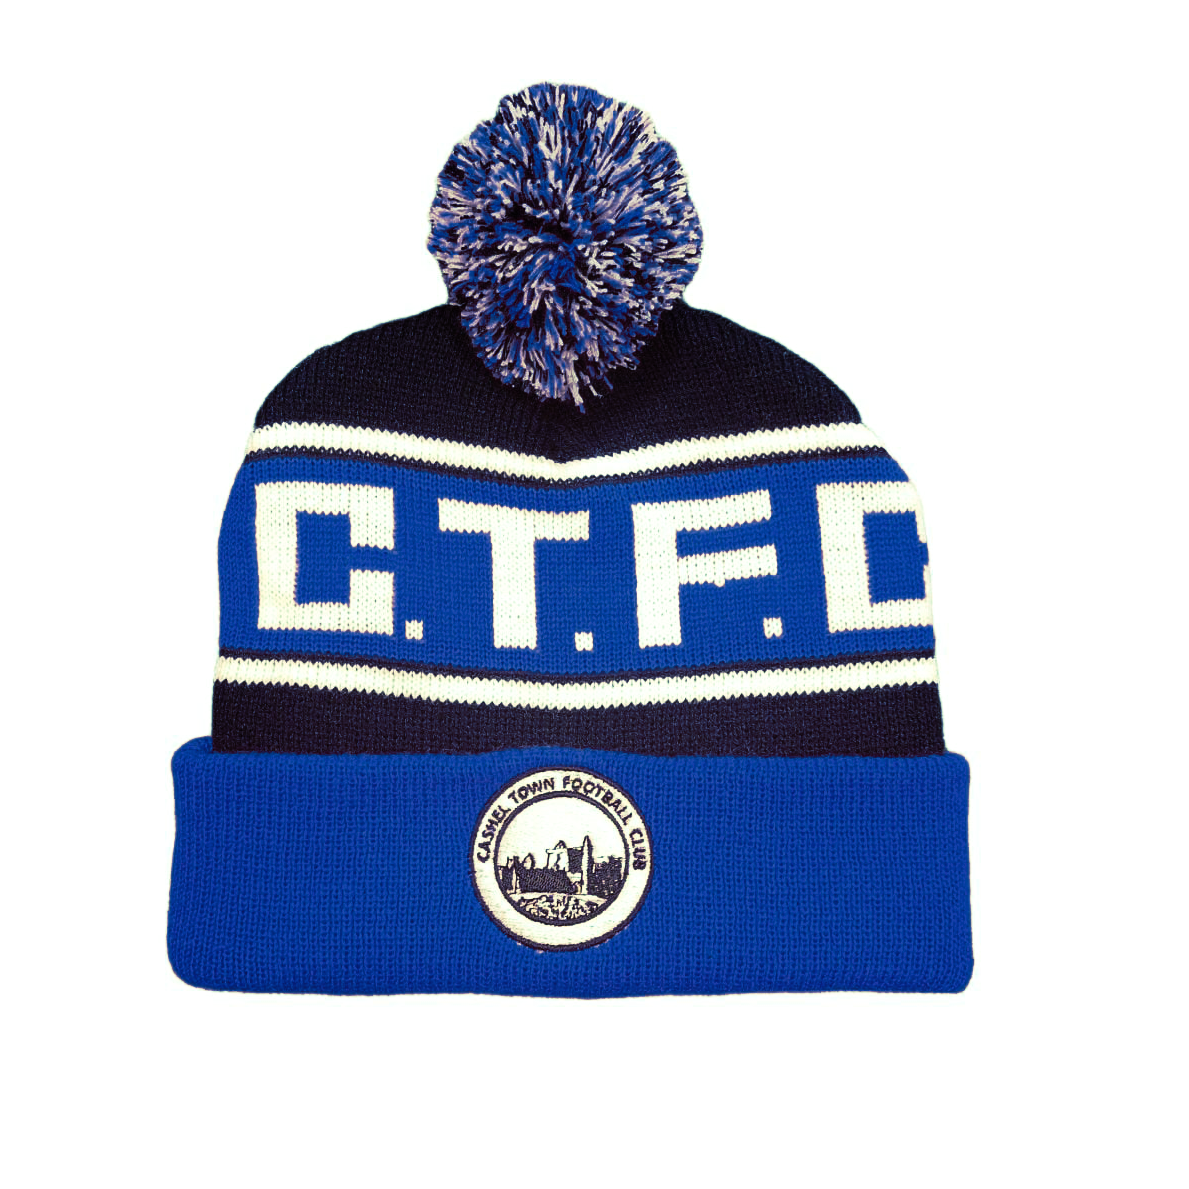 CTFC CRESTED BOBBLE HAT - BLUE